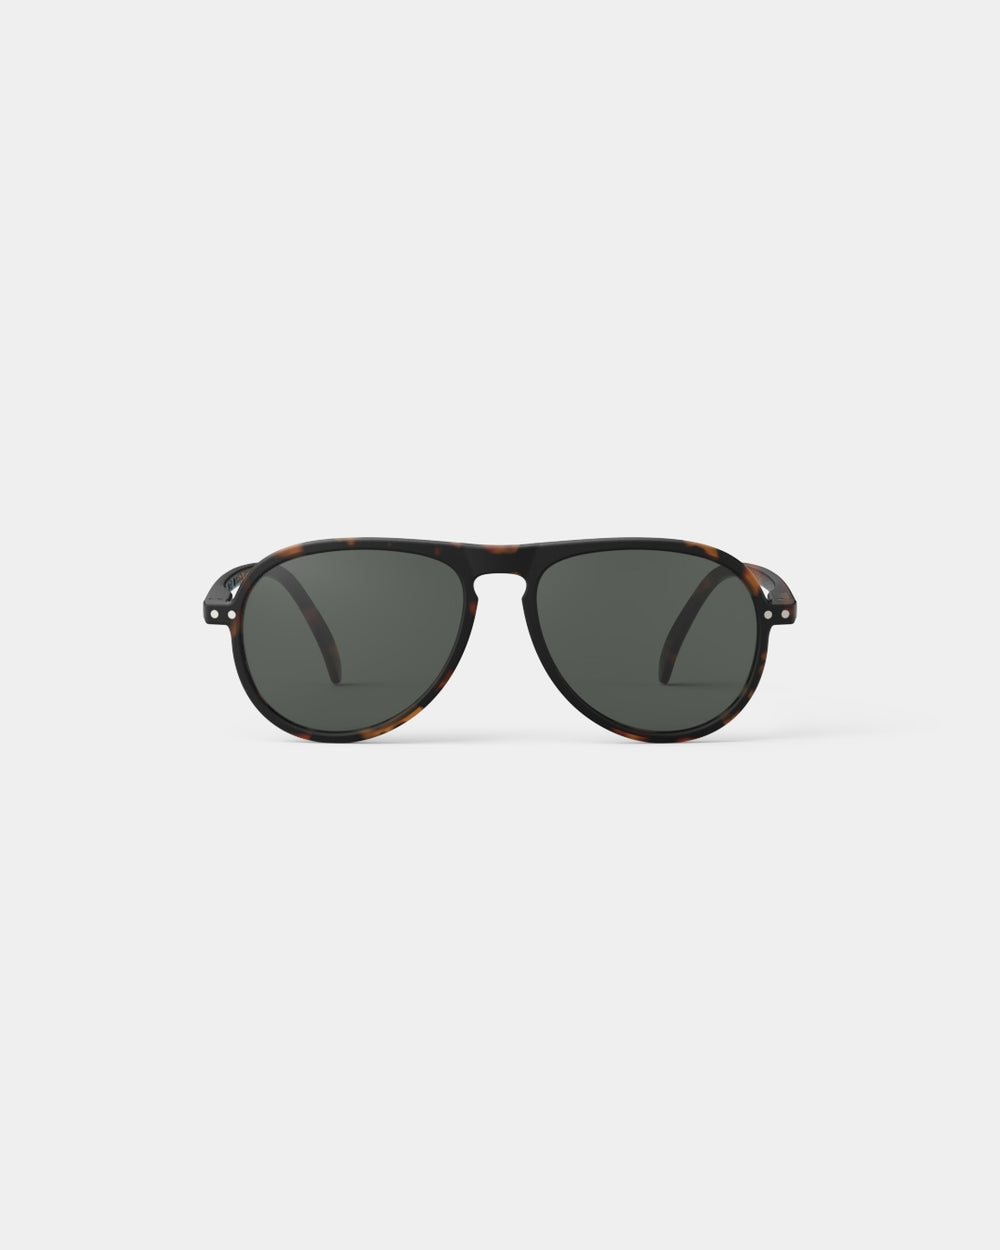 Gafas de sol #I - Tortoise Grey lenses